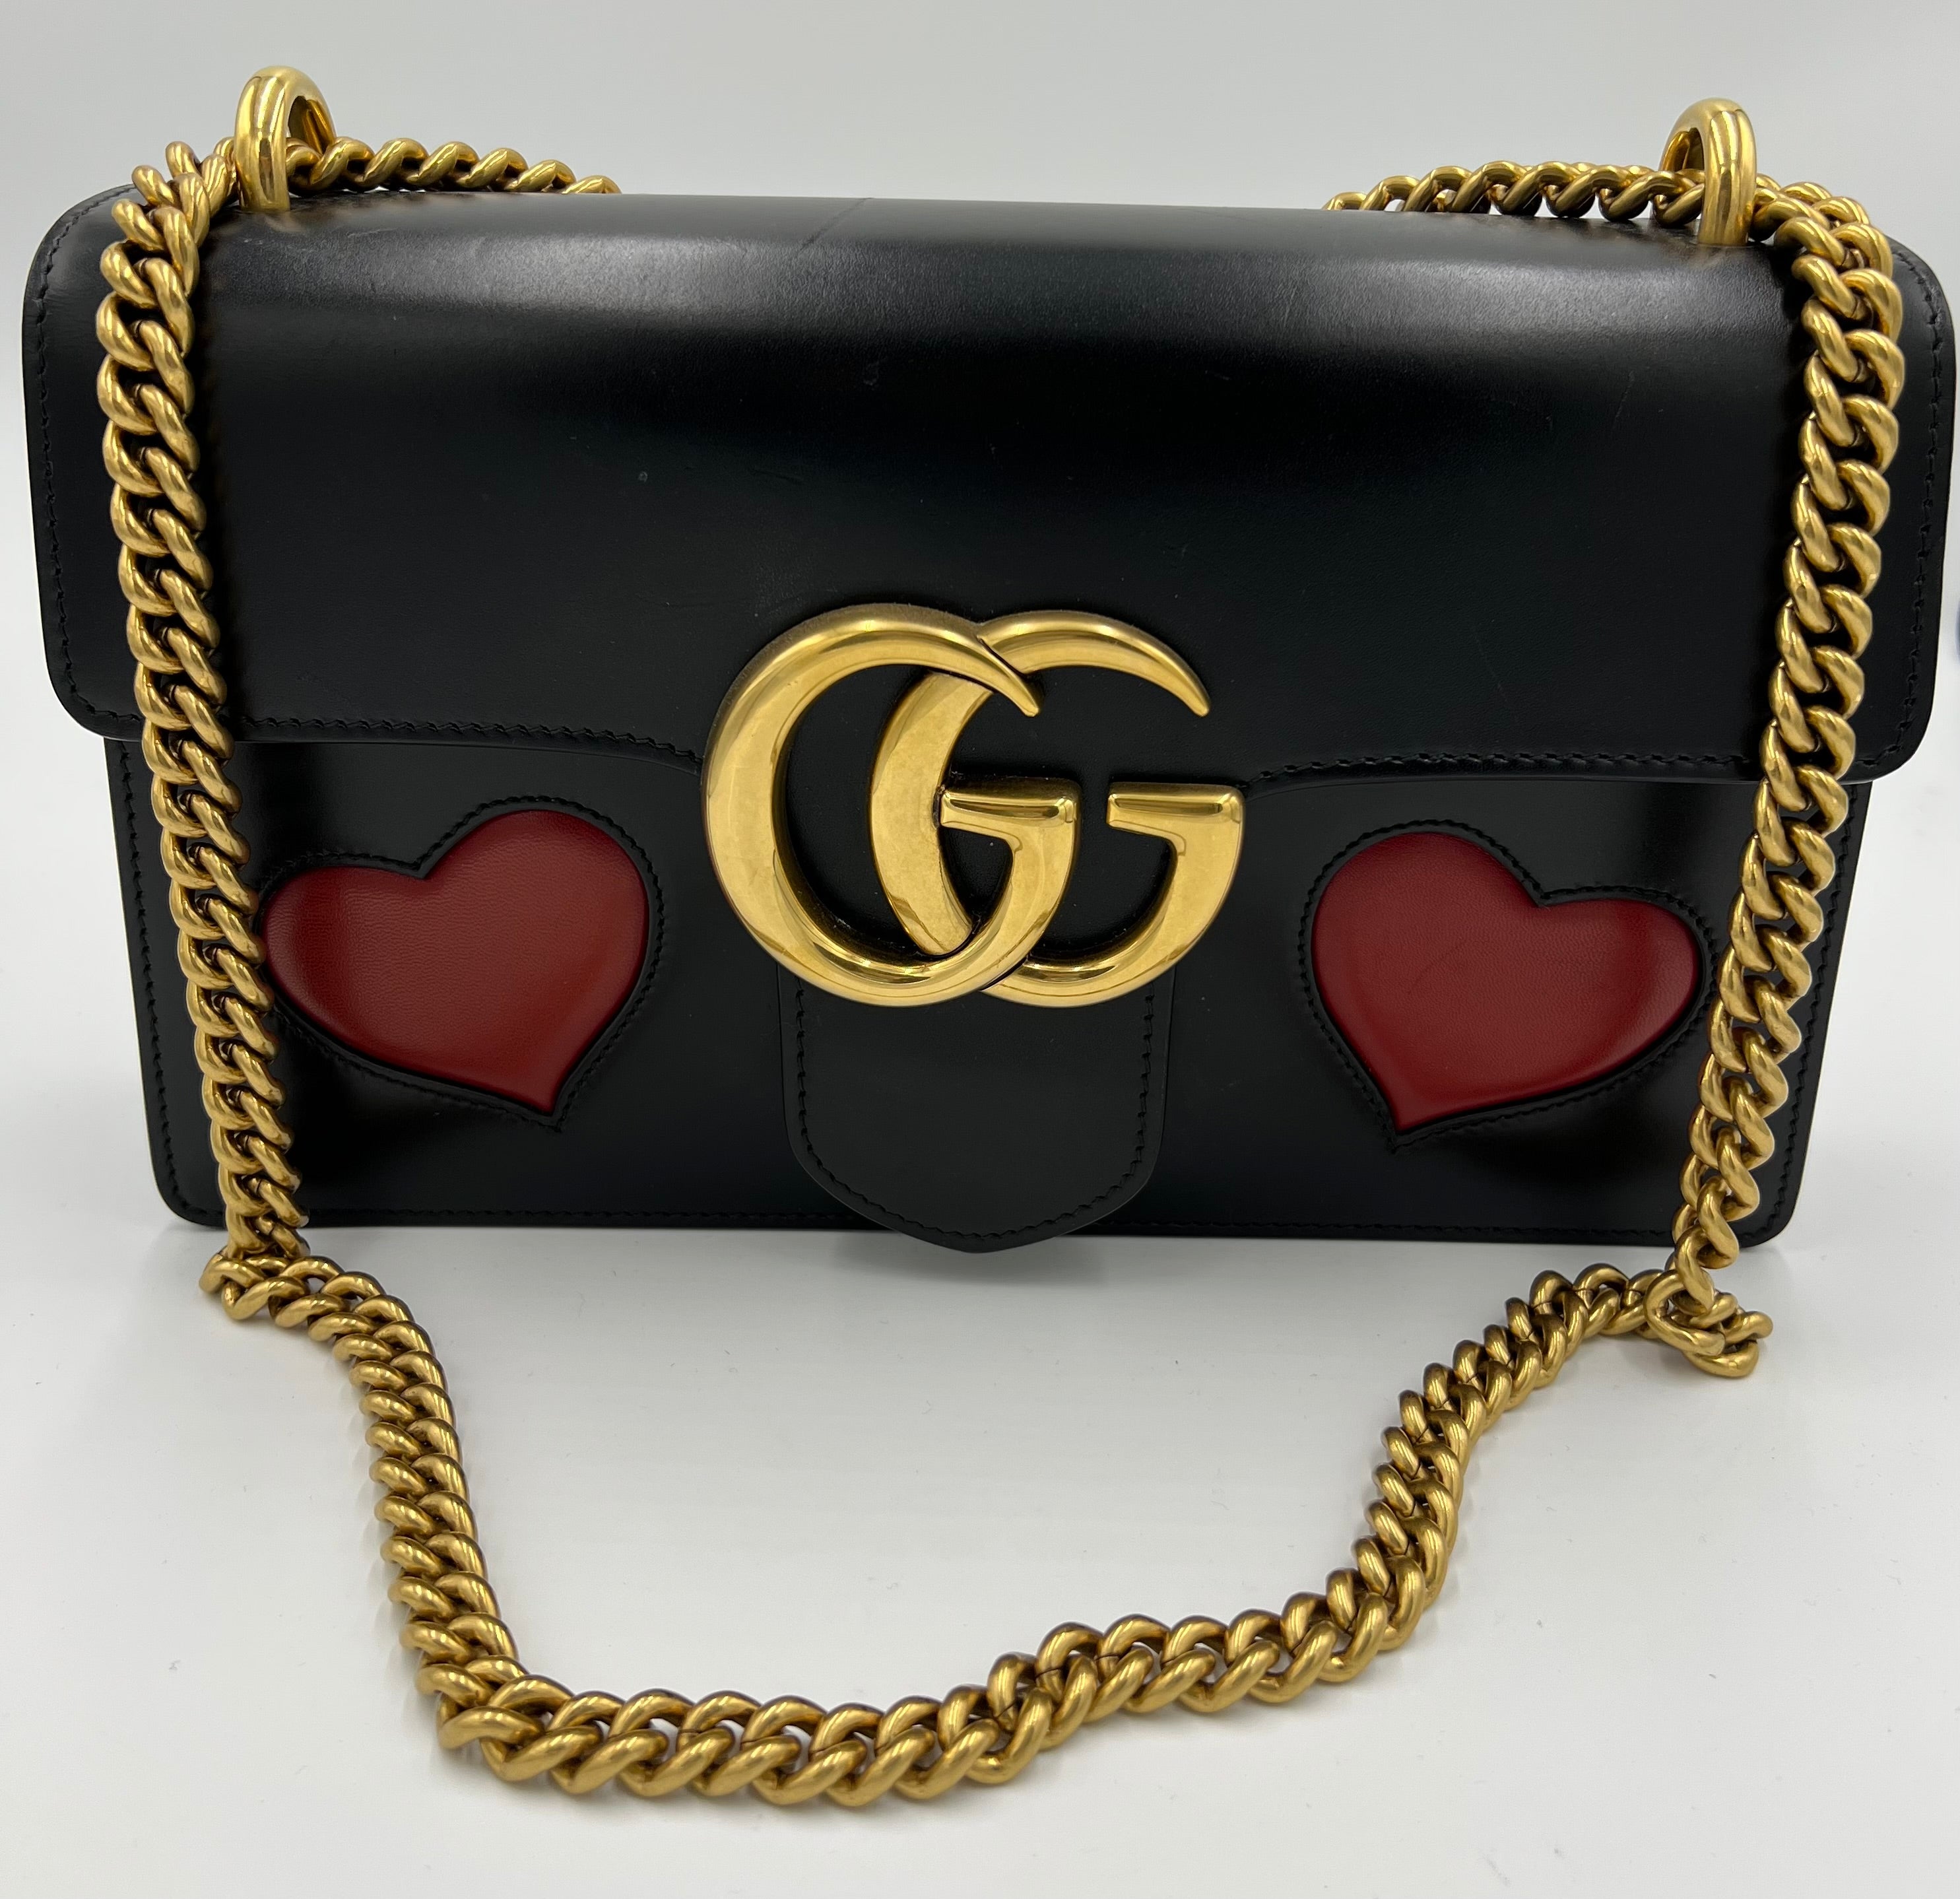 Chanel Tortoiseshell Bakelite Mini Box Bag, 1994-1996 (Very Good), Brown Womens Handbag